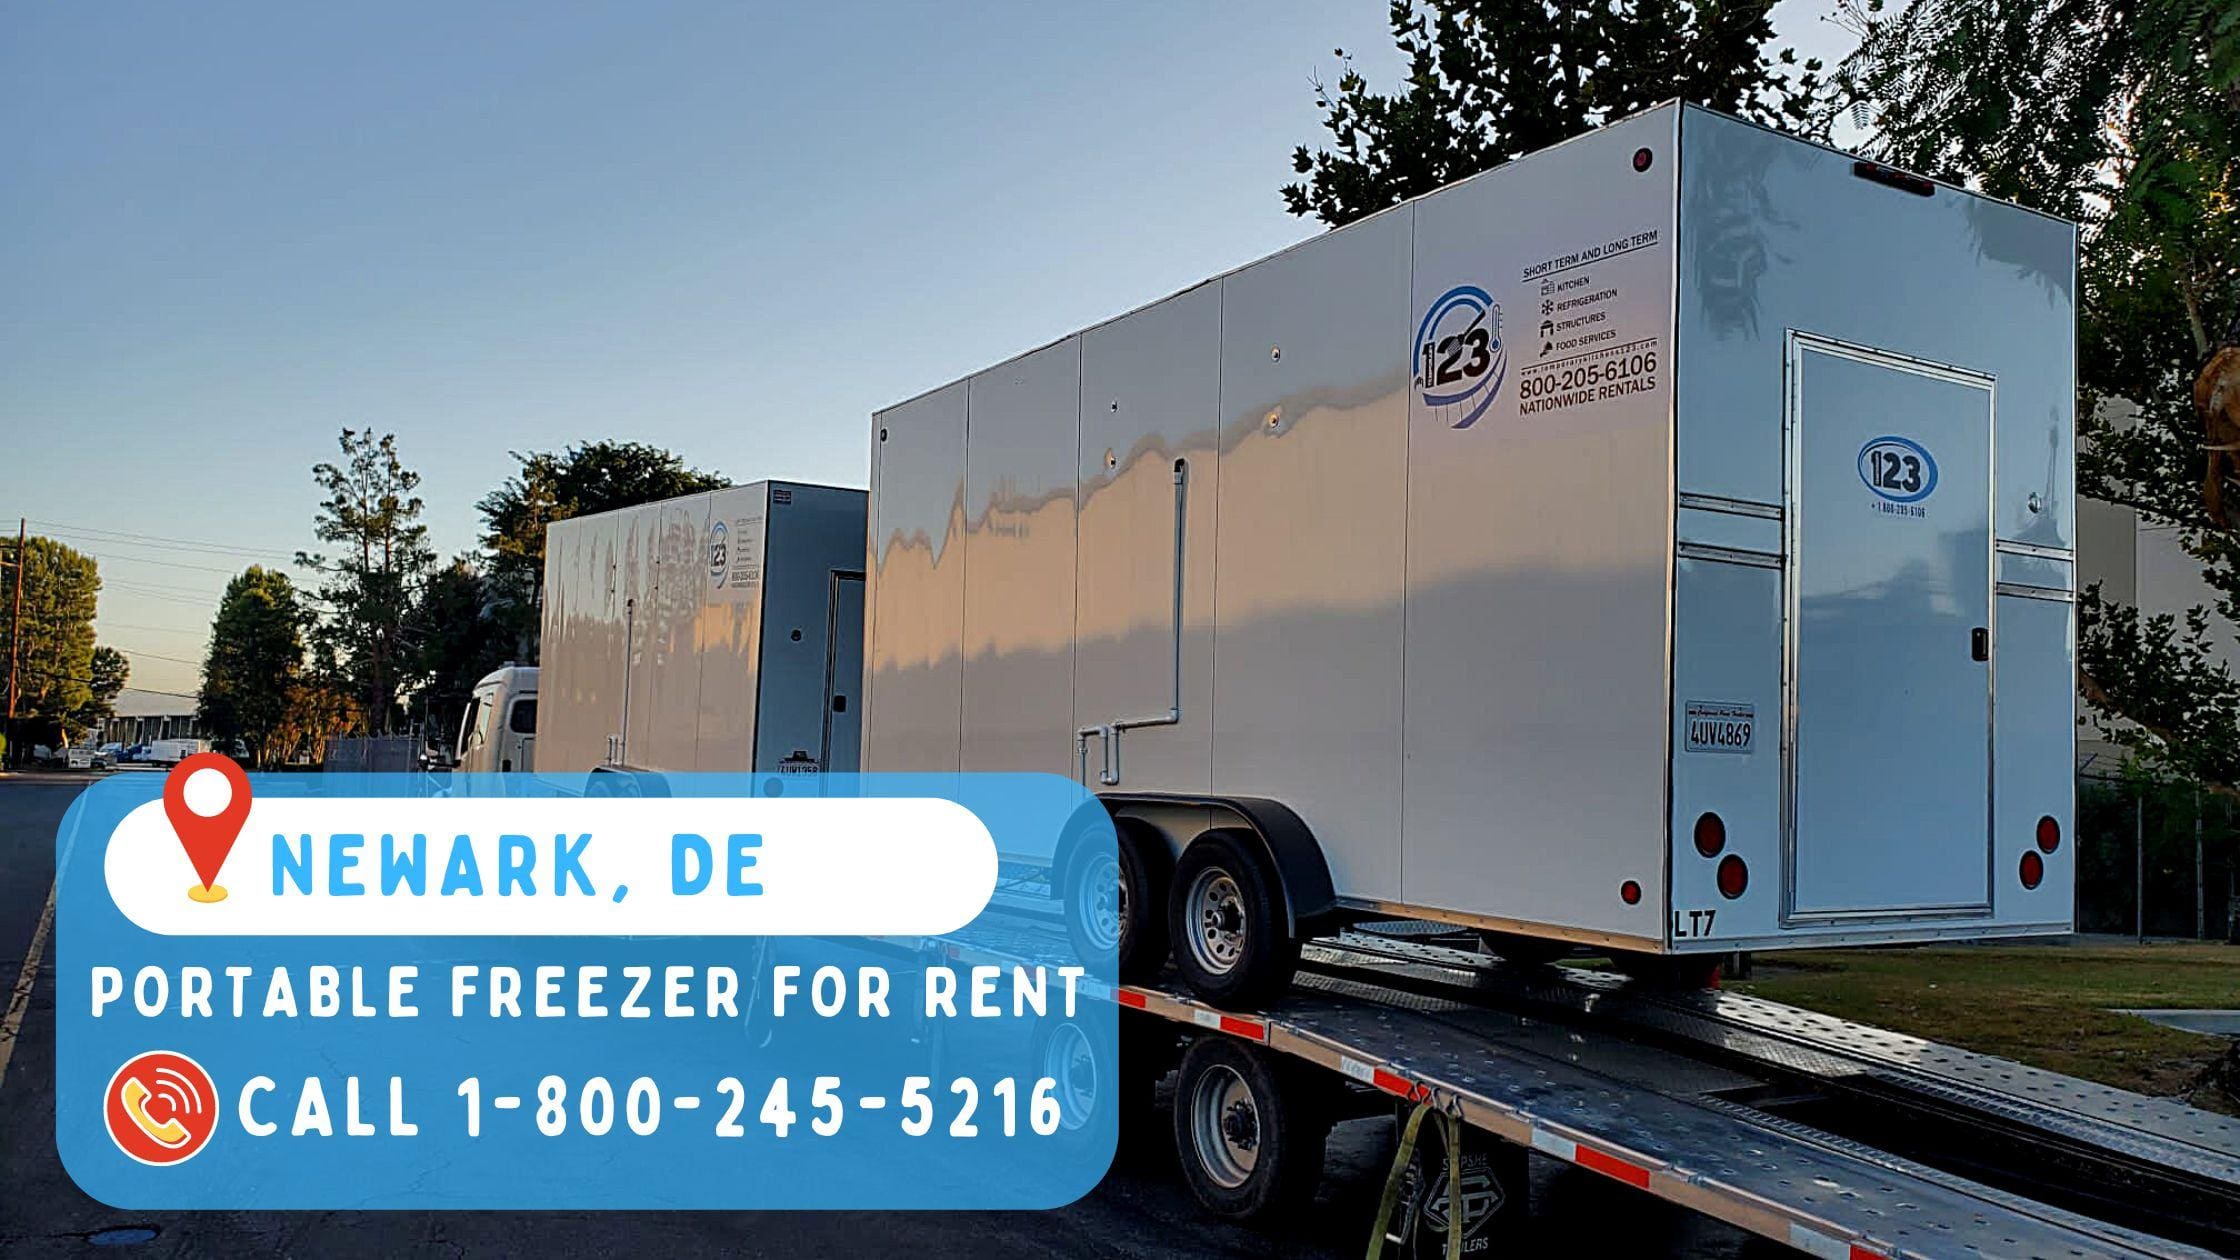 Portable freezer for rent in Newark